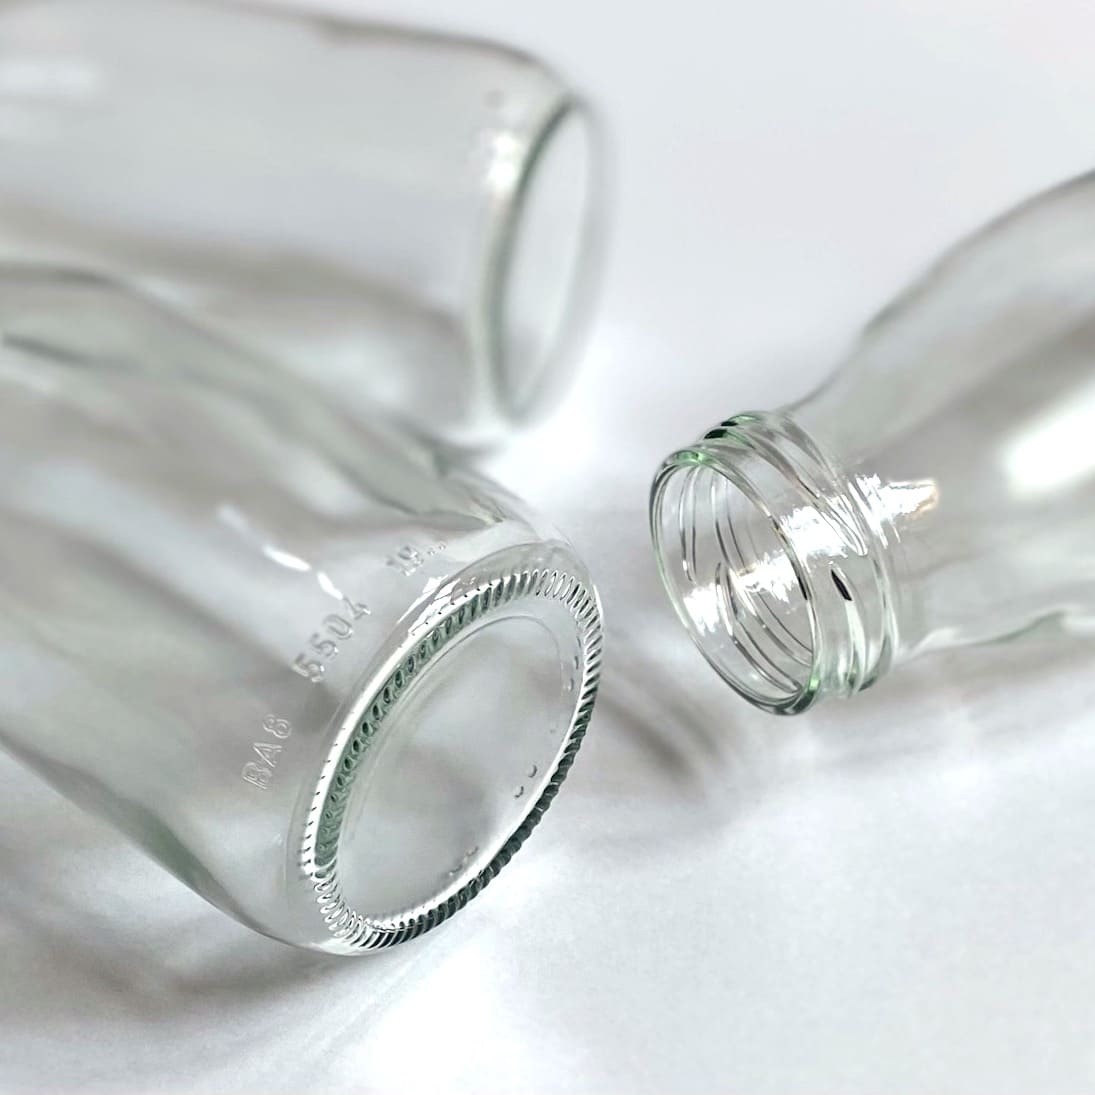 Trio of Milk Bottle Vases - Small